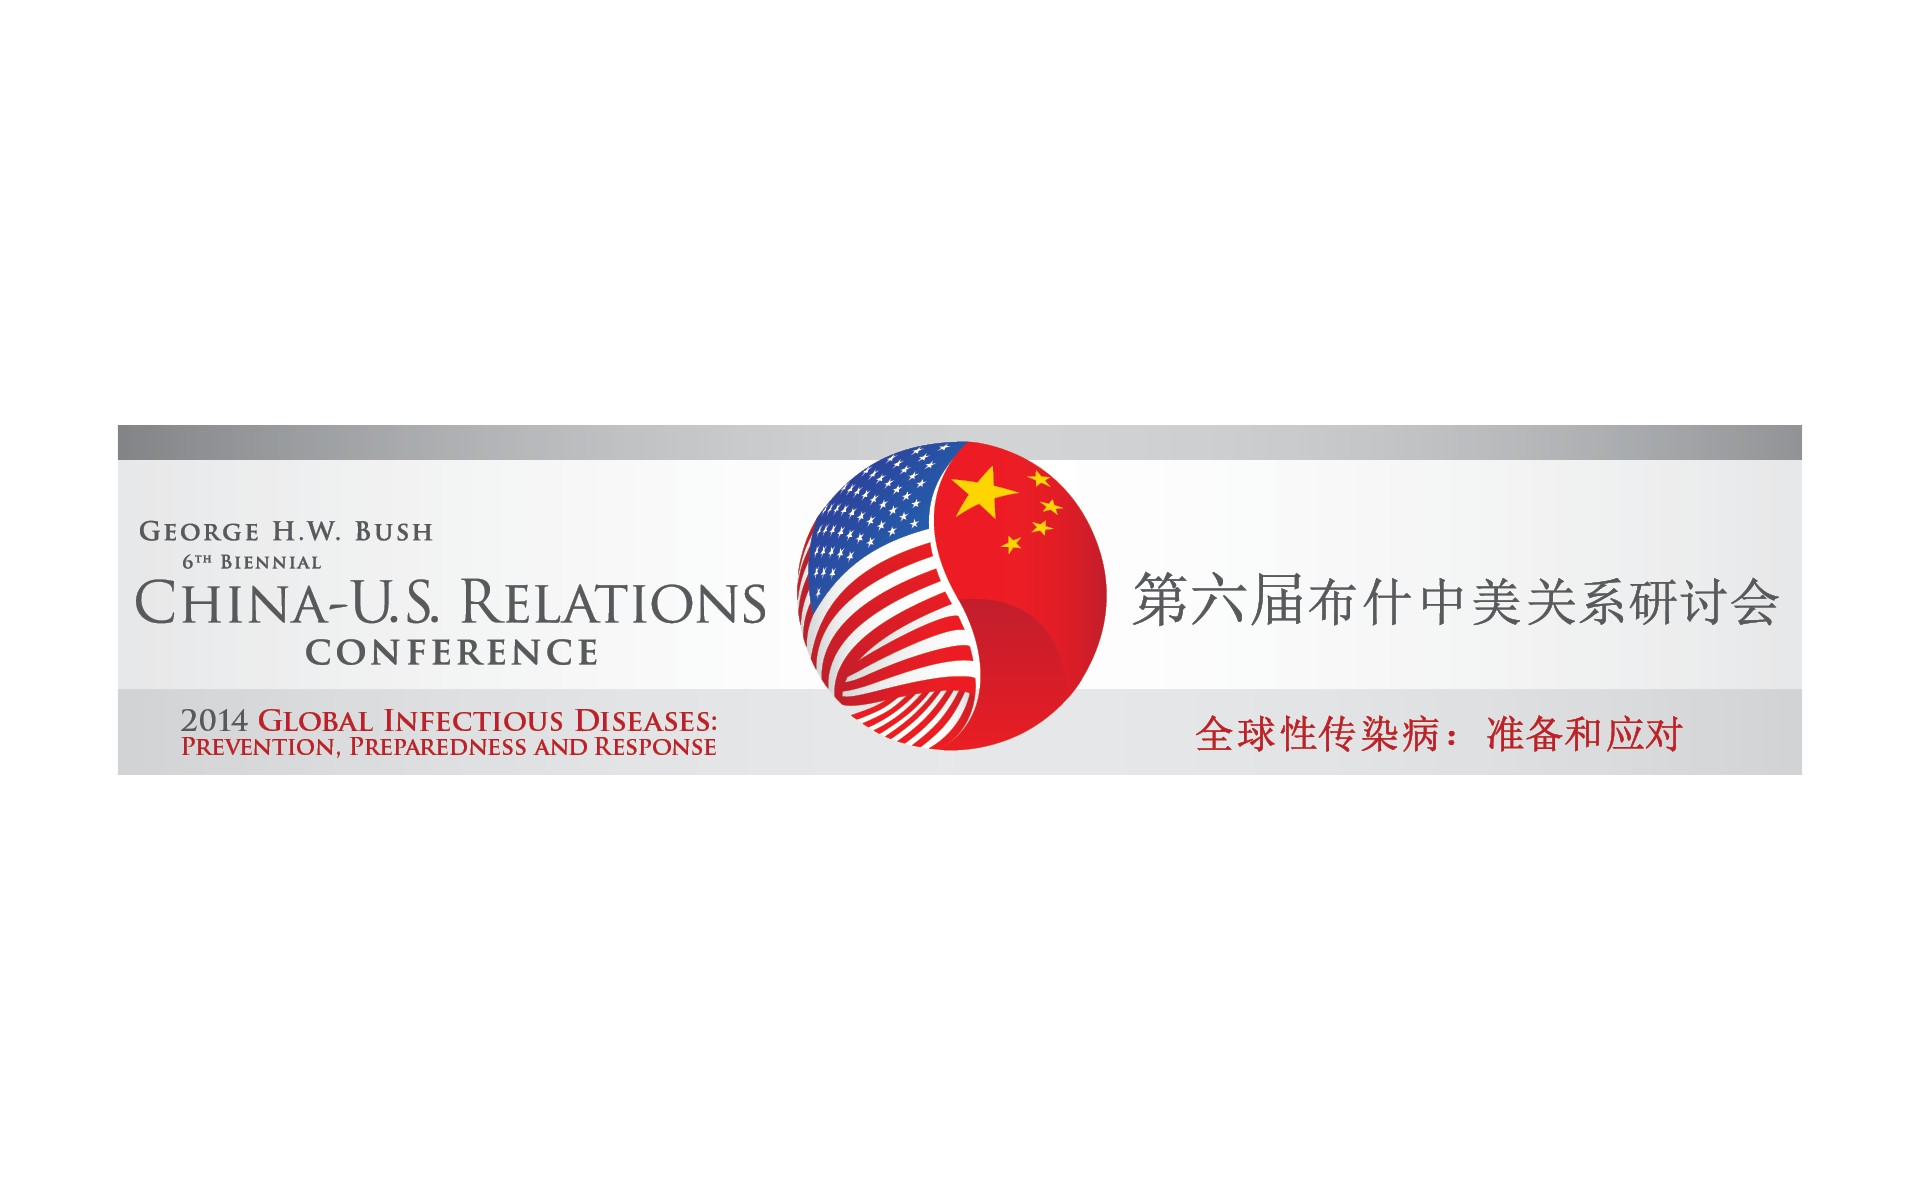 GEORGE H.W. BUSH CHINA-U.S. RELATIONS CONFERENCE china-us.tamu.edu